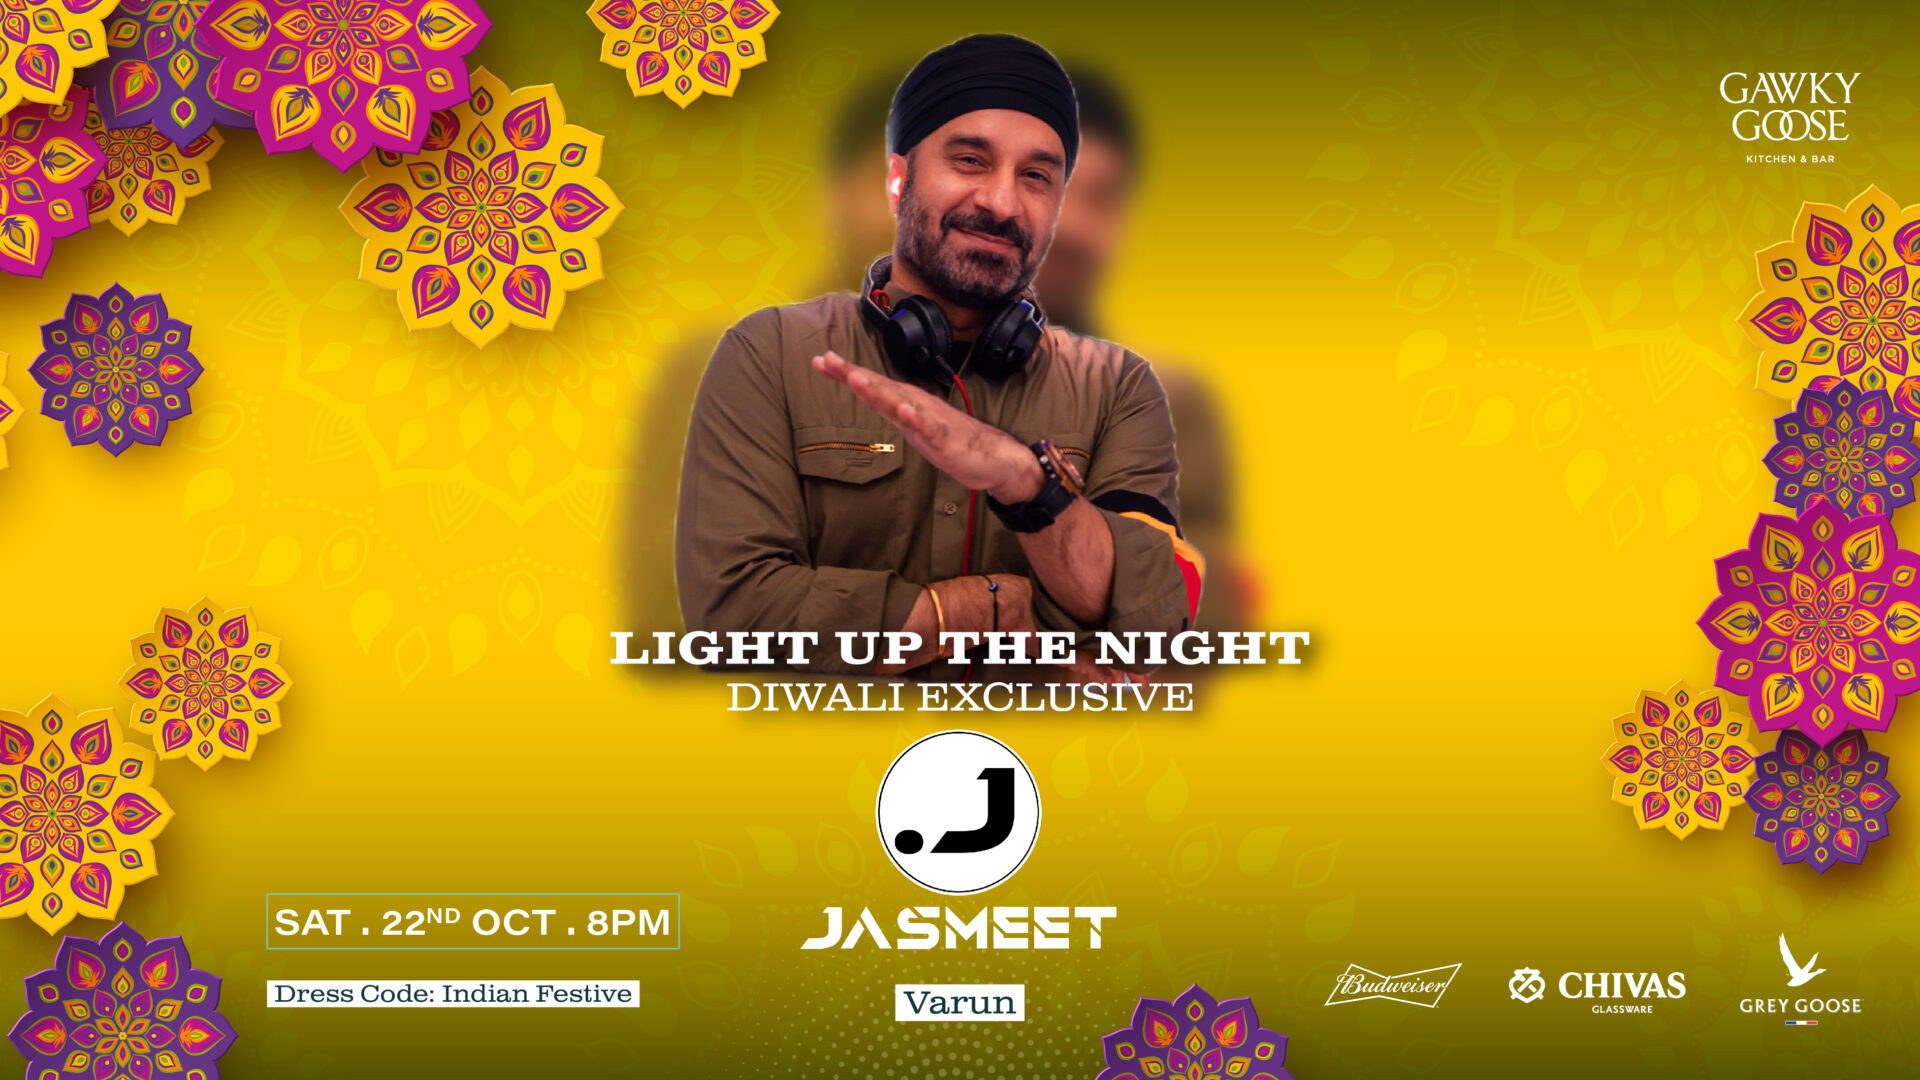 Light up the night - Jasmeet & Varun - 22nd October